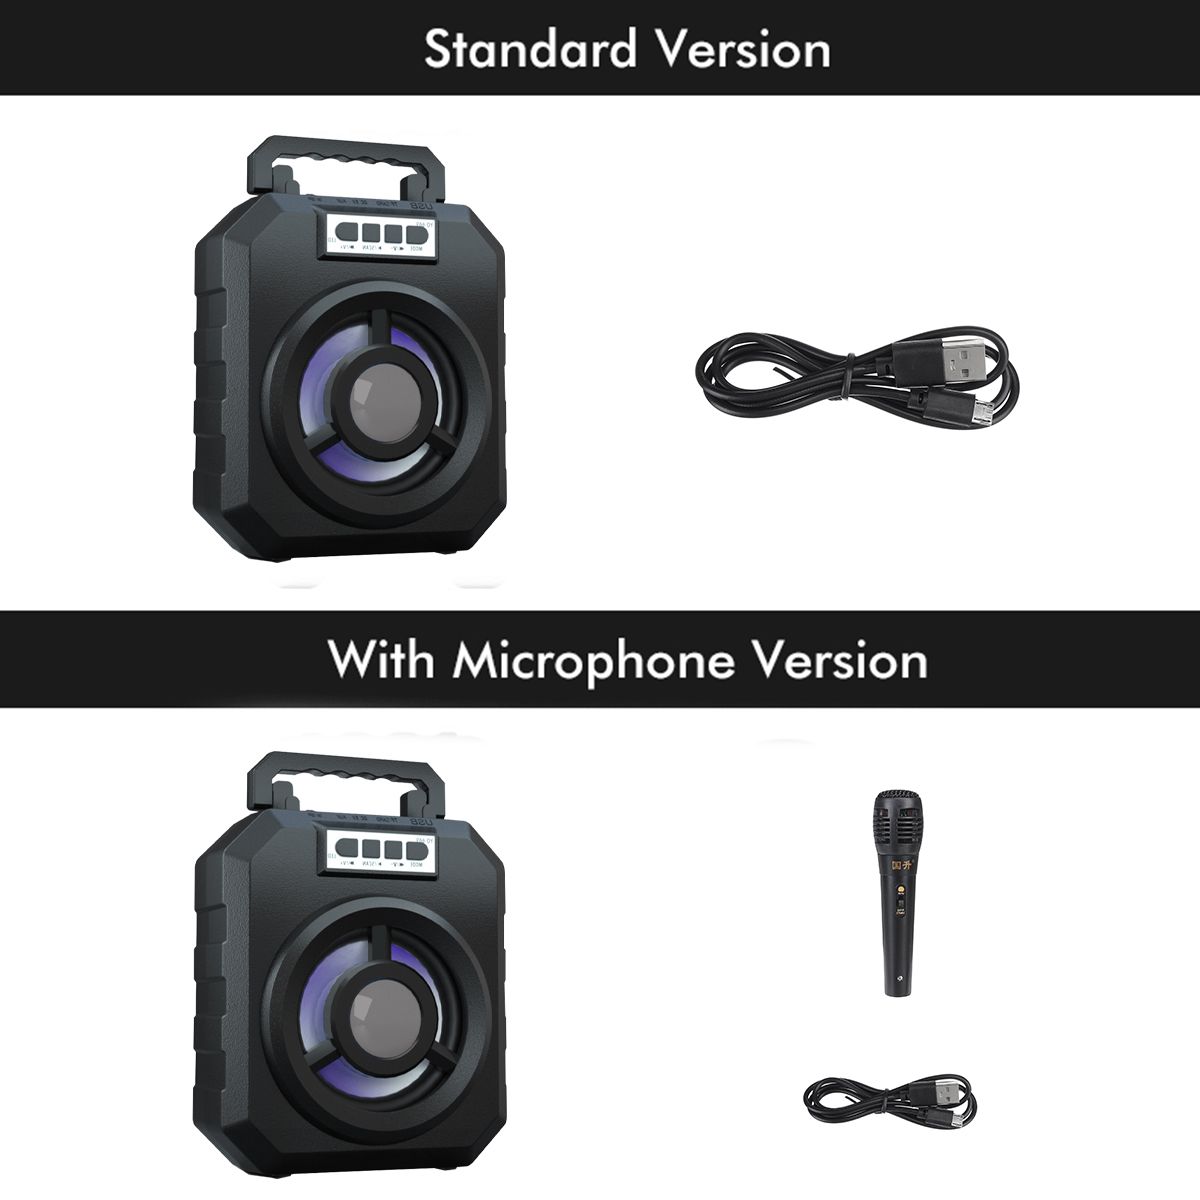 Portable-bluetooth-Wireless-Speaker-Subwoofer-Stereo-Heavy-Bass-USB-FM-Radio-AUX-Speaker-1650512